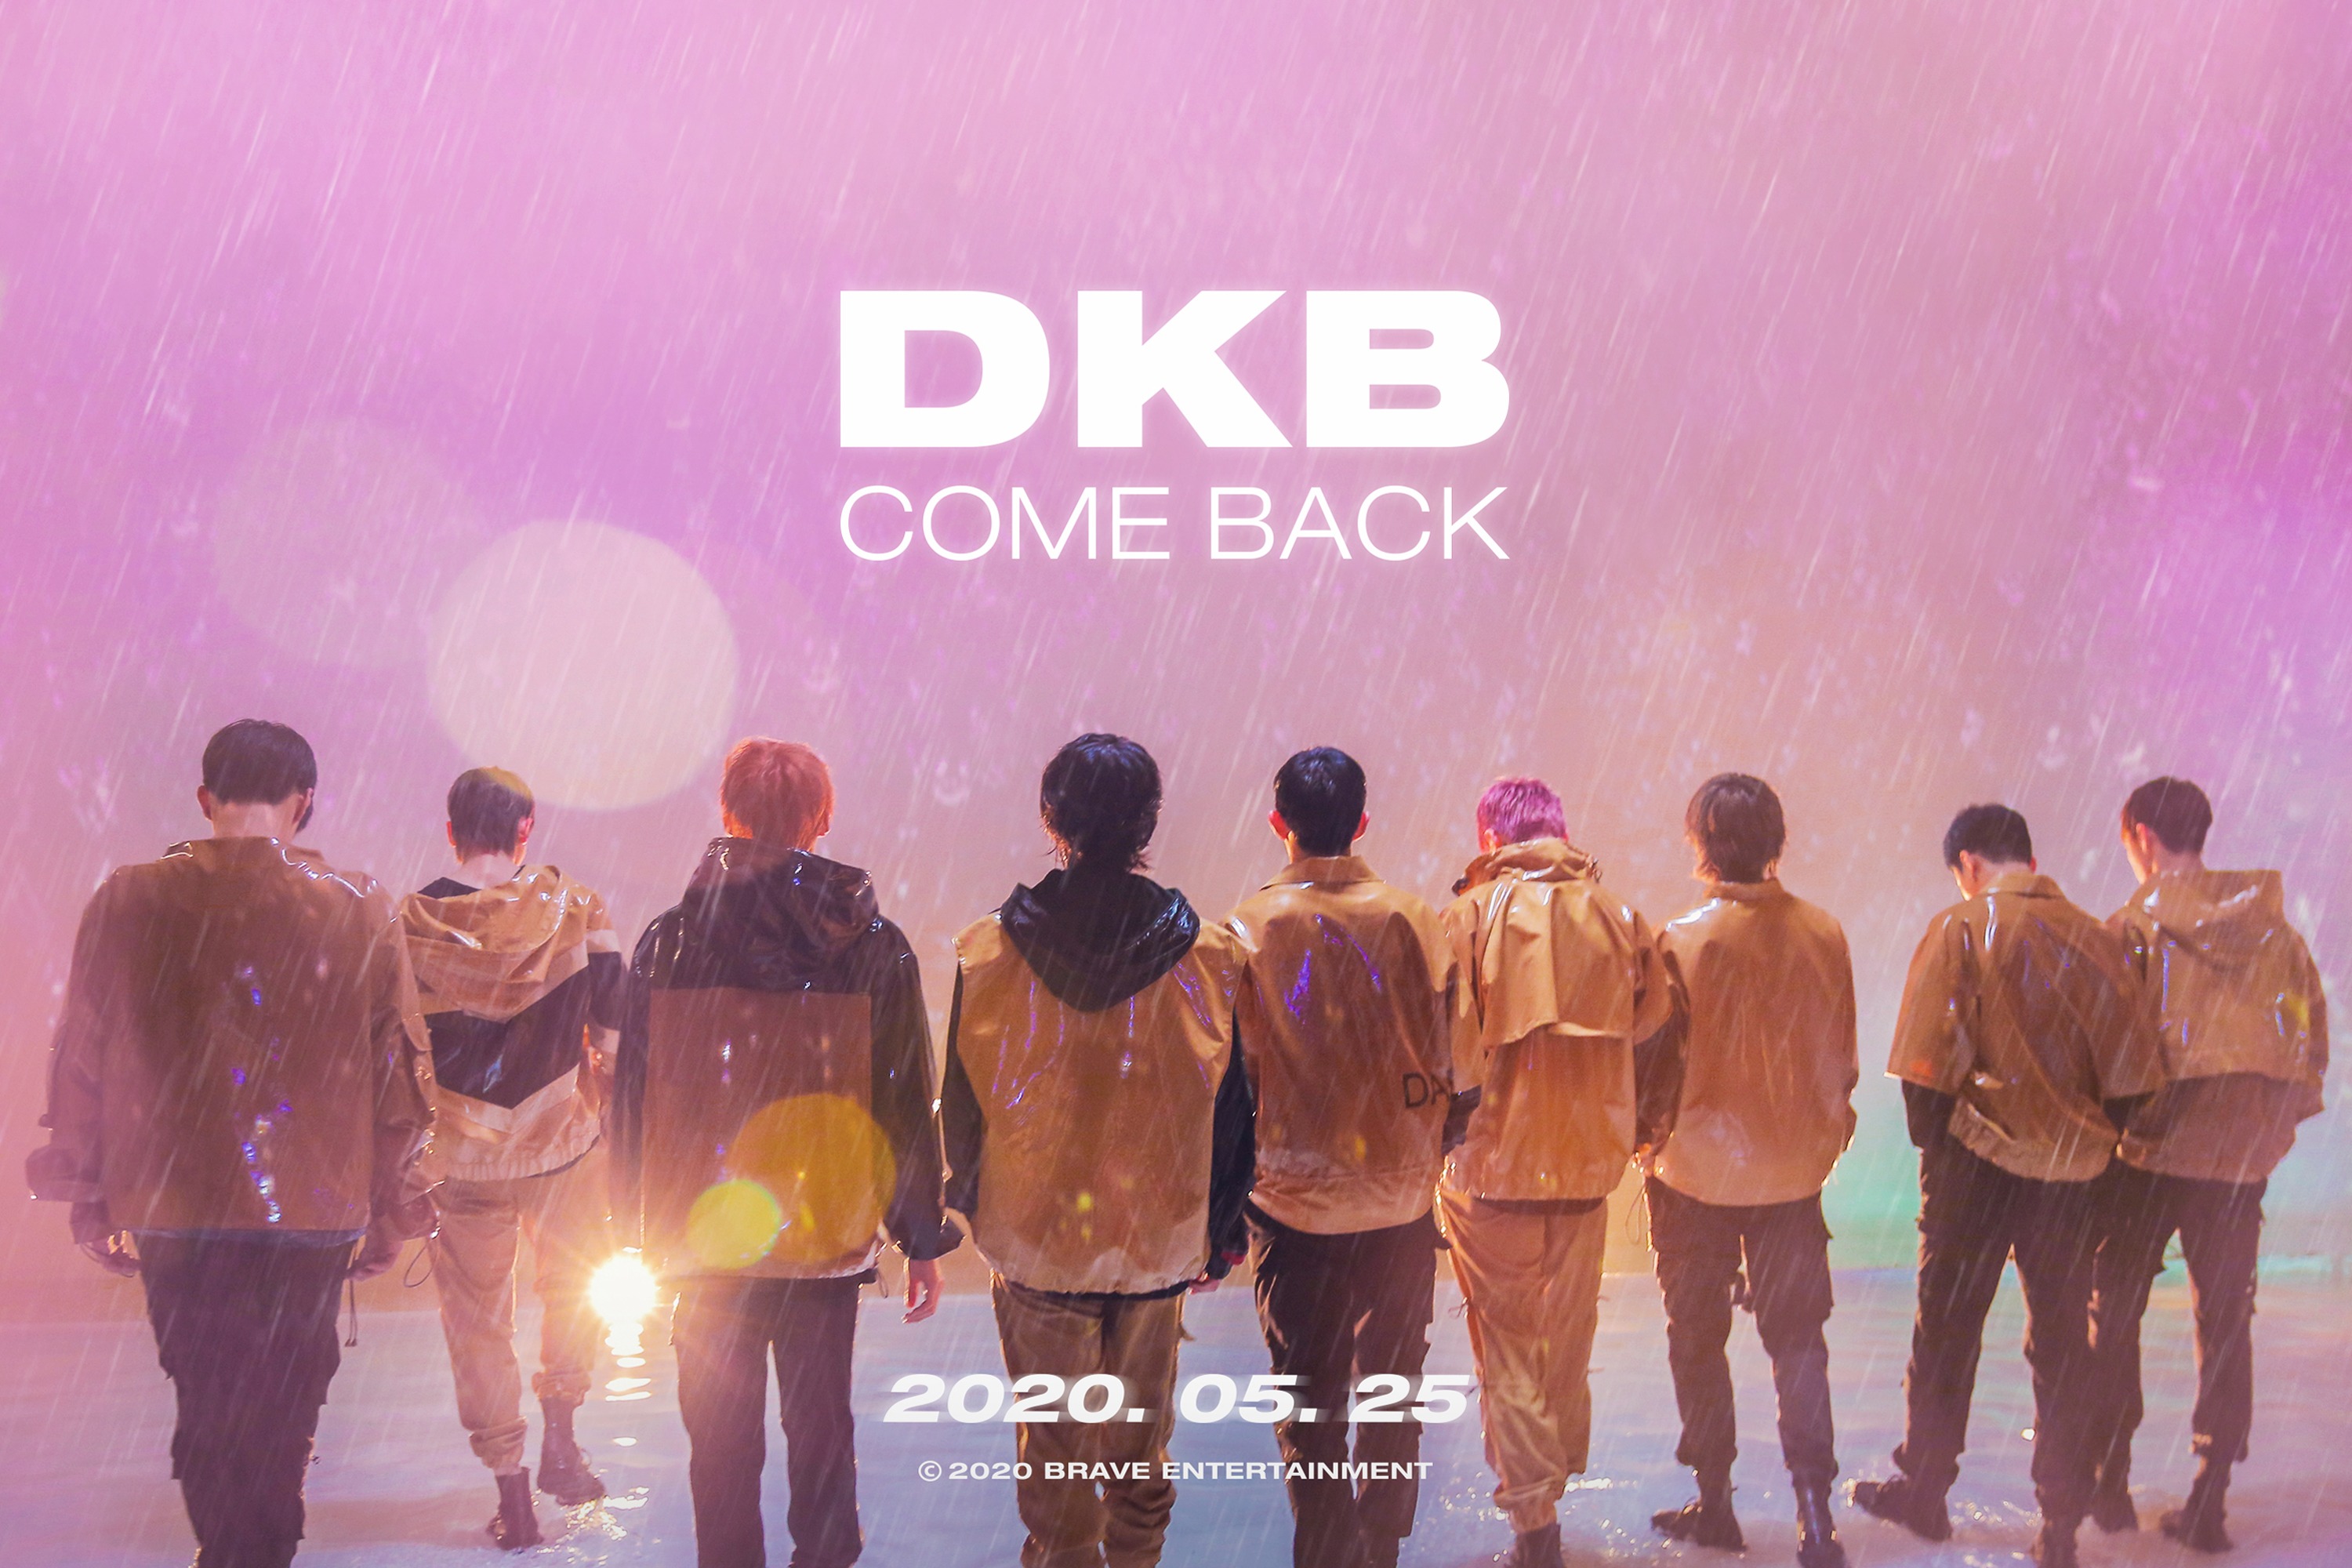 Dkb ダークビー 次世代スーパールーキー Dkbが早くも韓国でカムバック 予告イメージを初公開 気になる後ろ姿 に大注目 韓ペン Kanpen